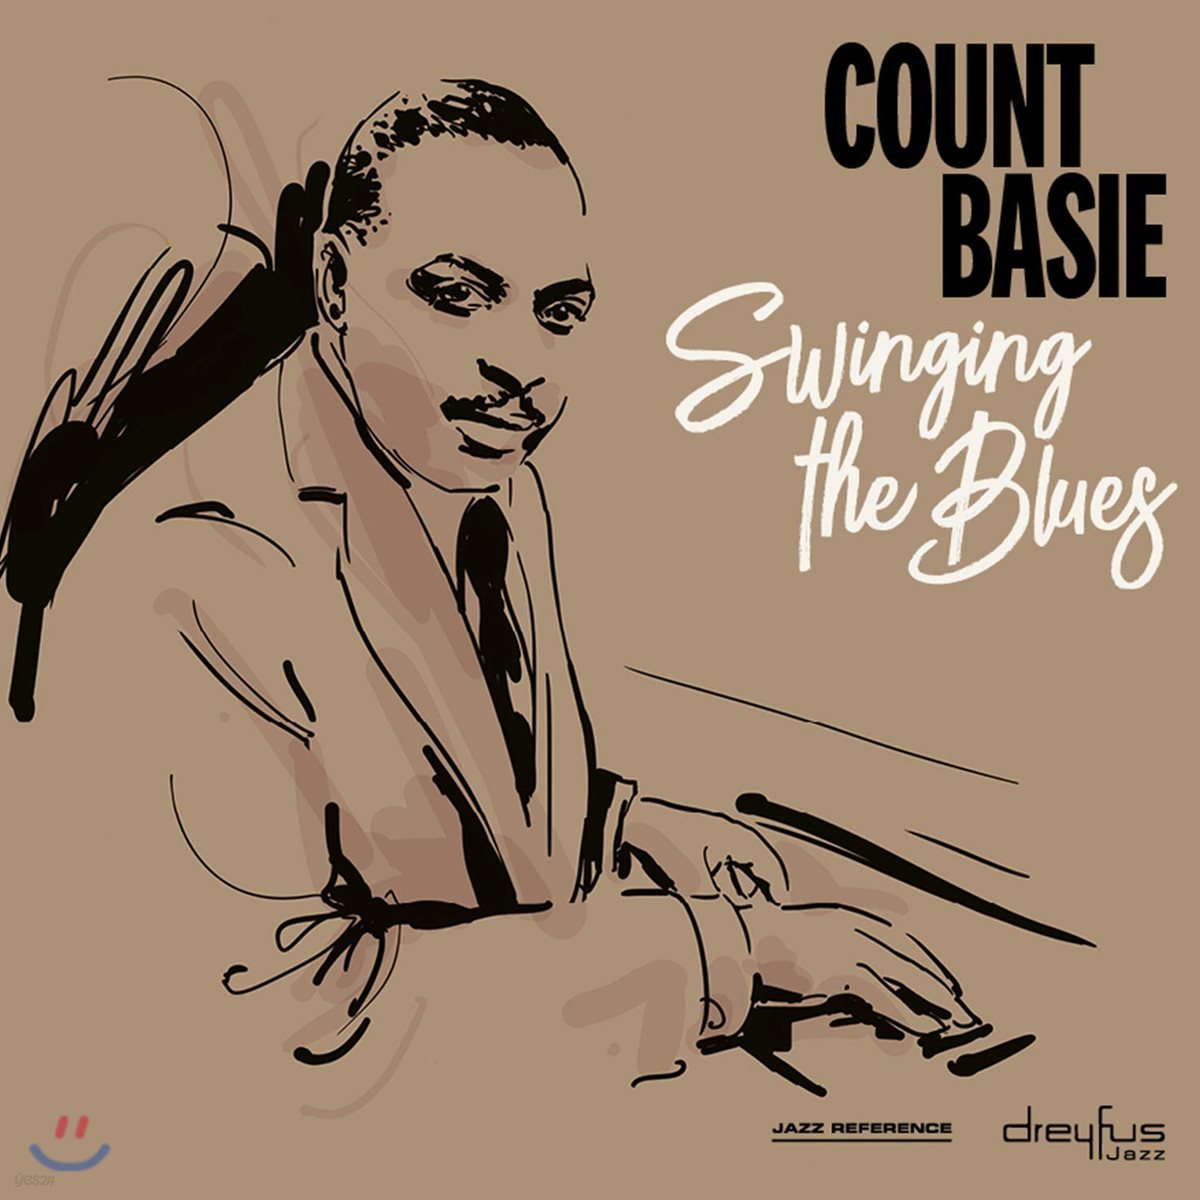 Count Basie (카운트 베이시) - Swinging the Blues [LP]